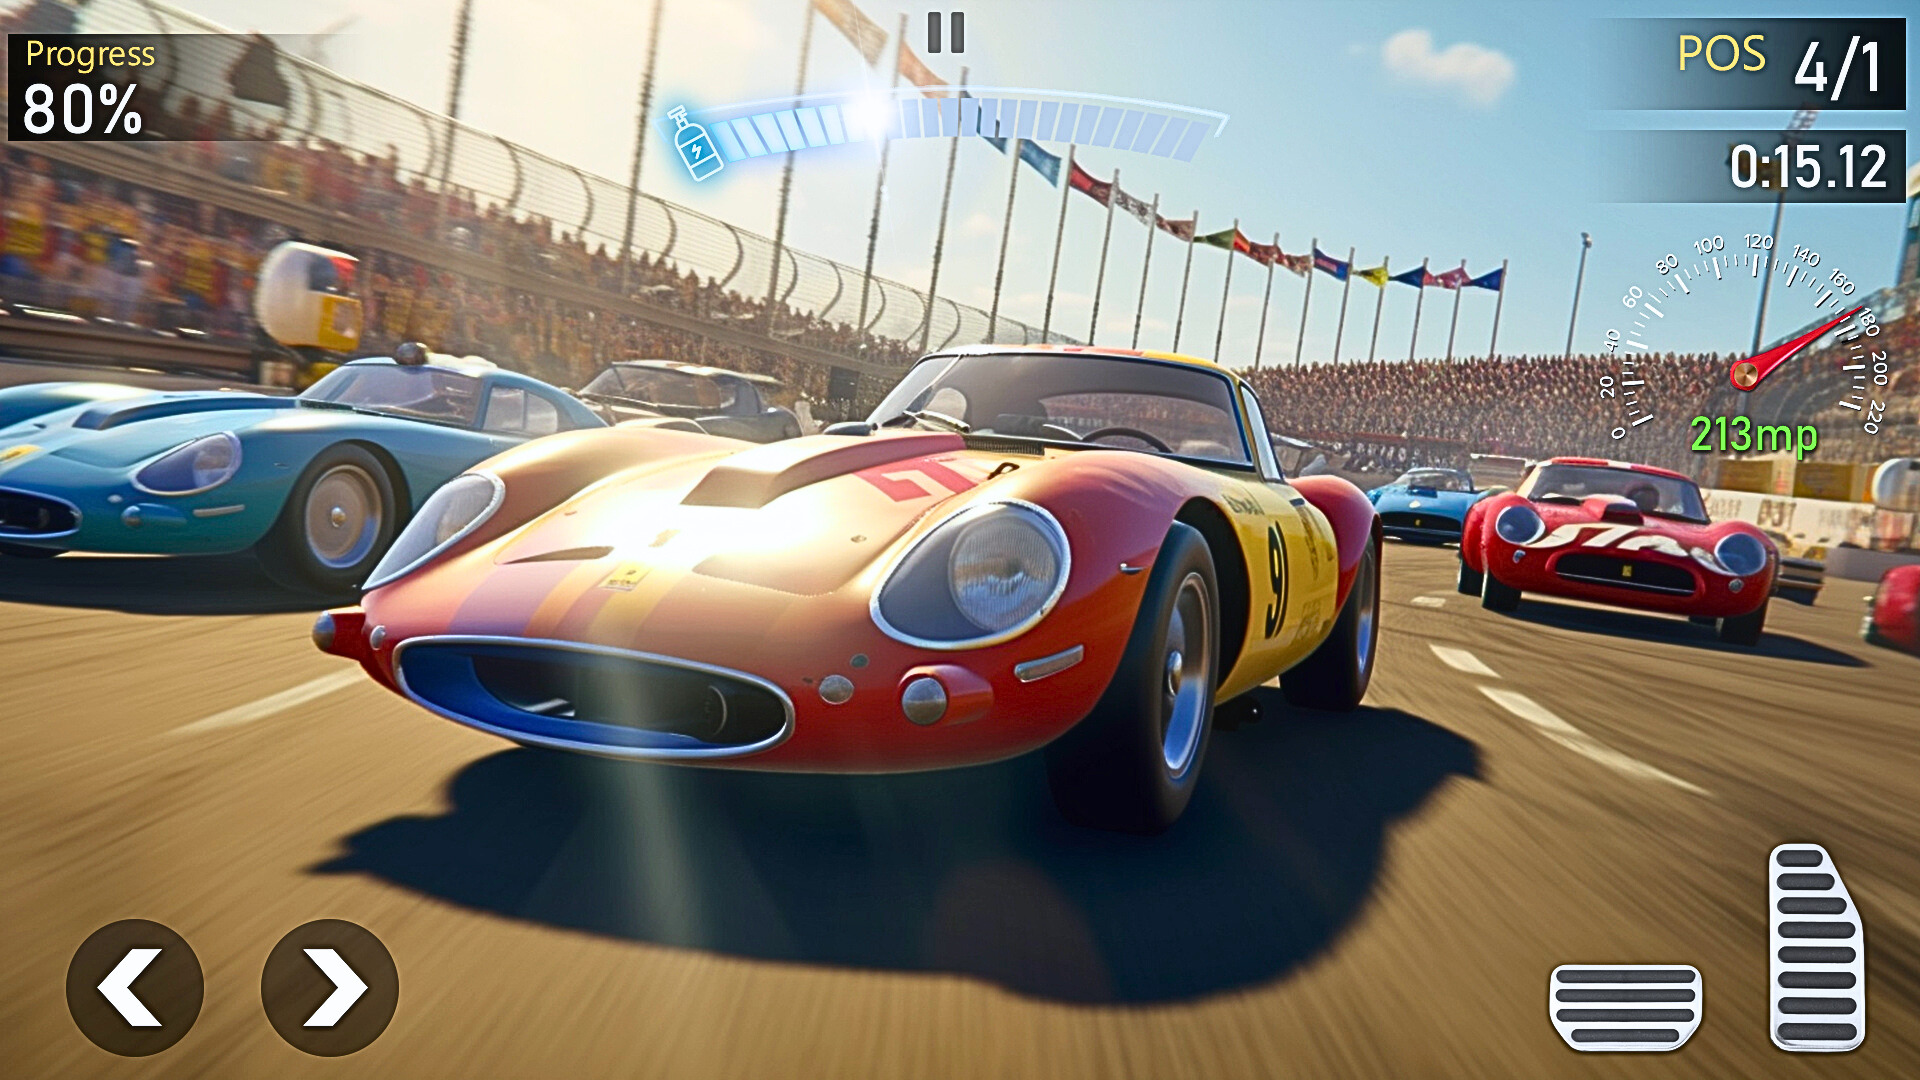 Drift Limitless - Car Drifting Games - Car Racing Games - Android GamePlay  